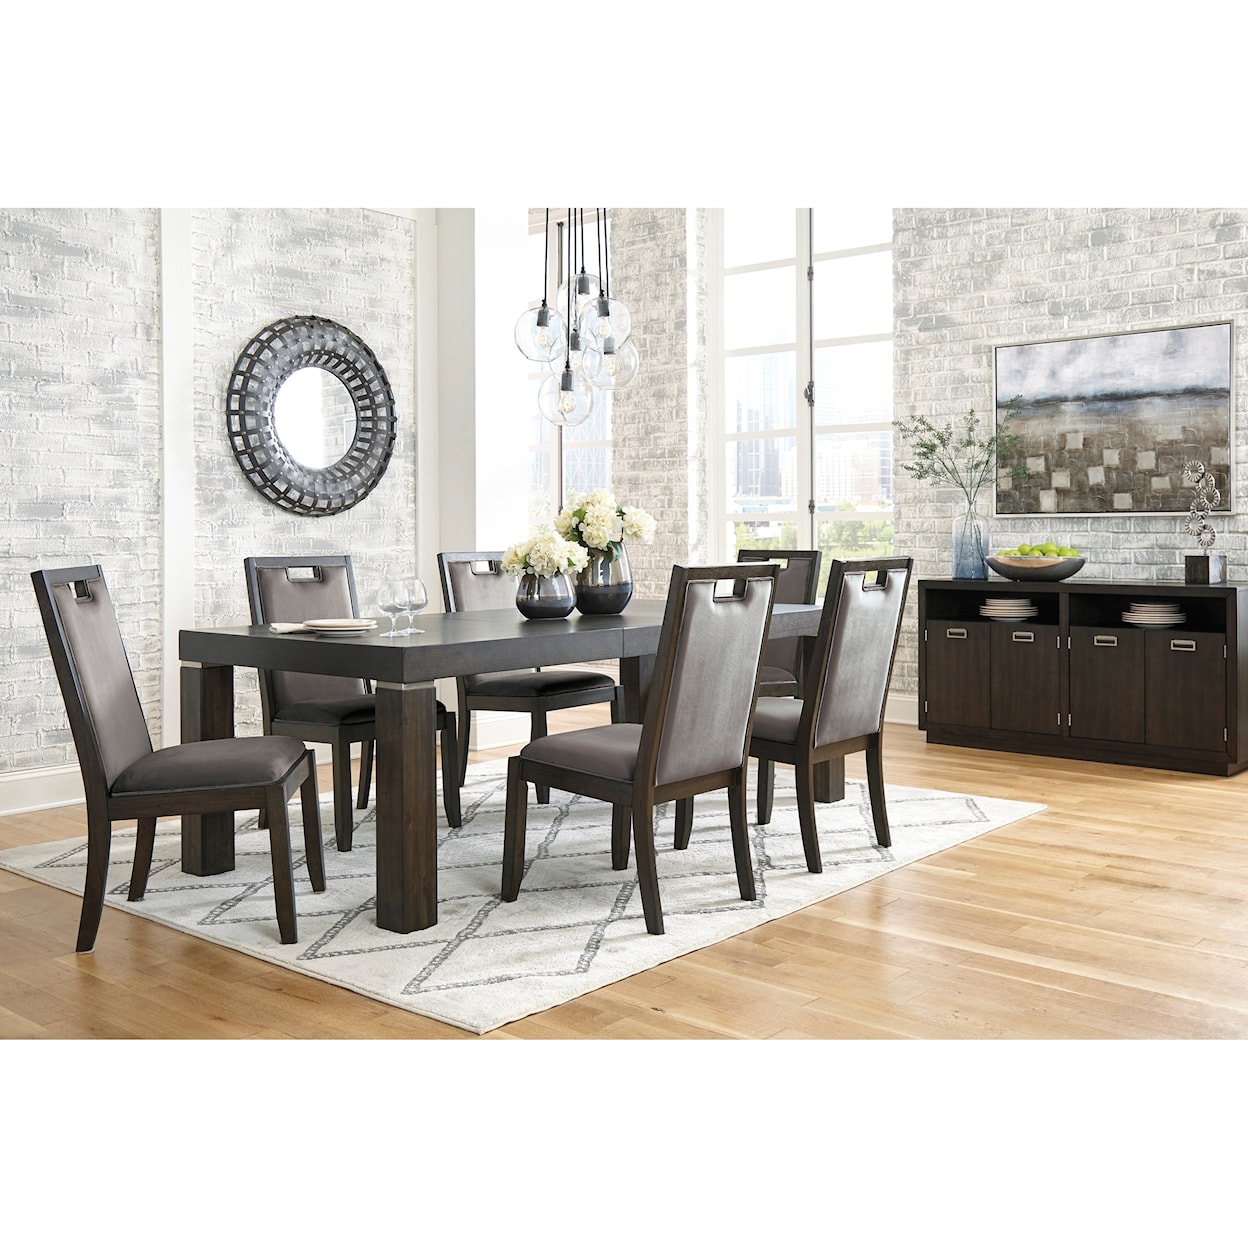 Ashley Furniture Signature Design Hyndell Dining Room Group